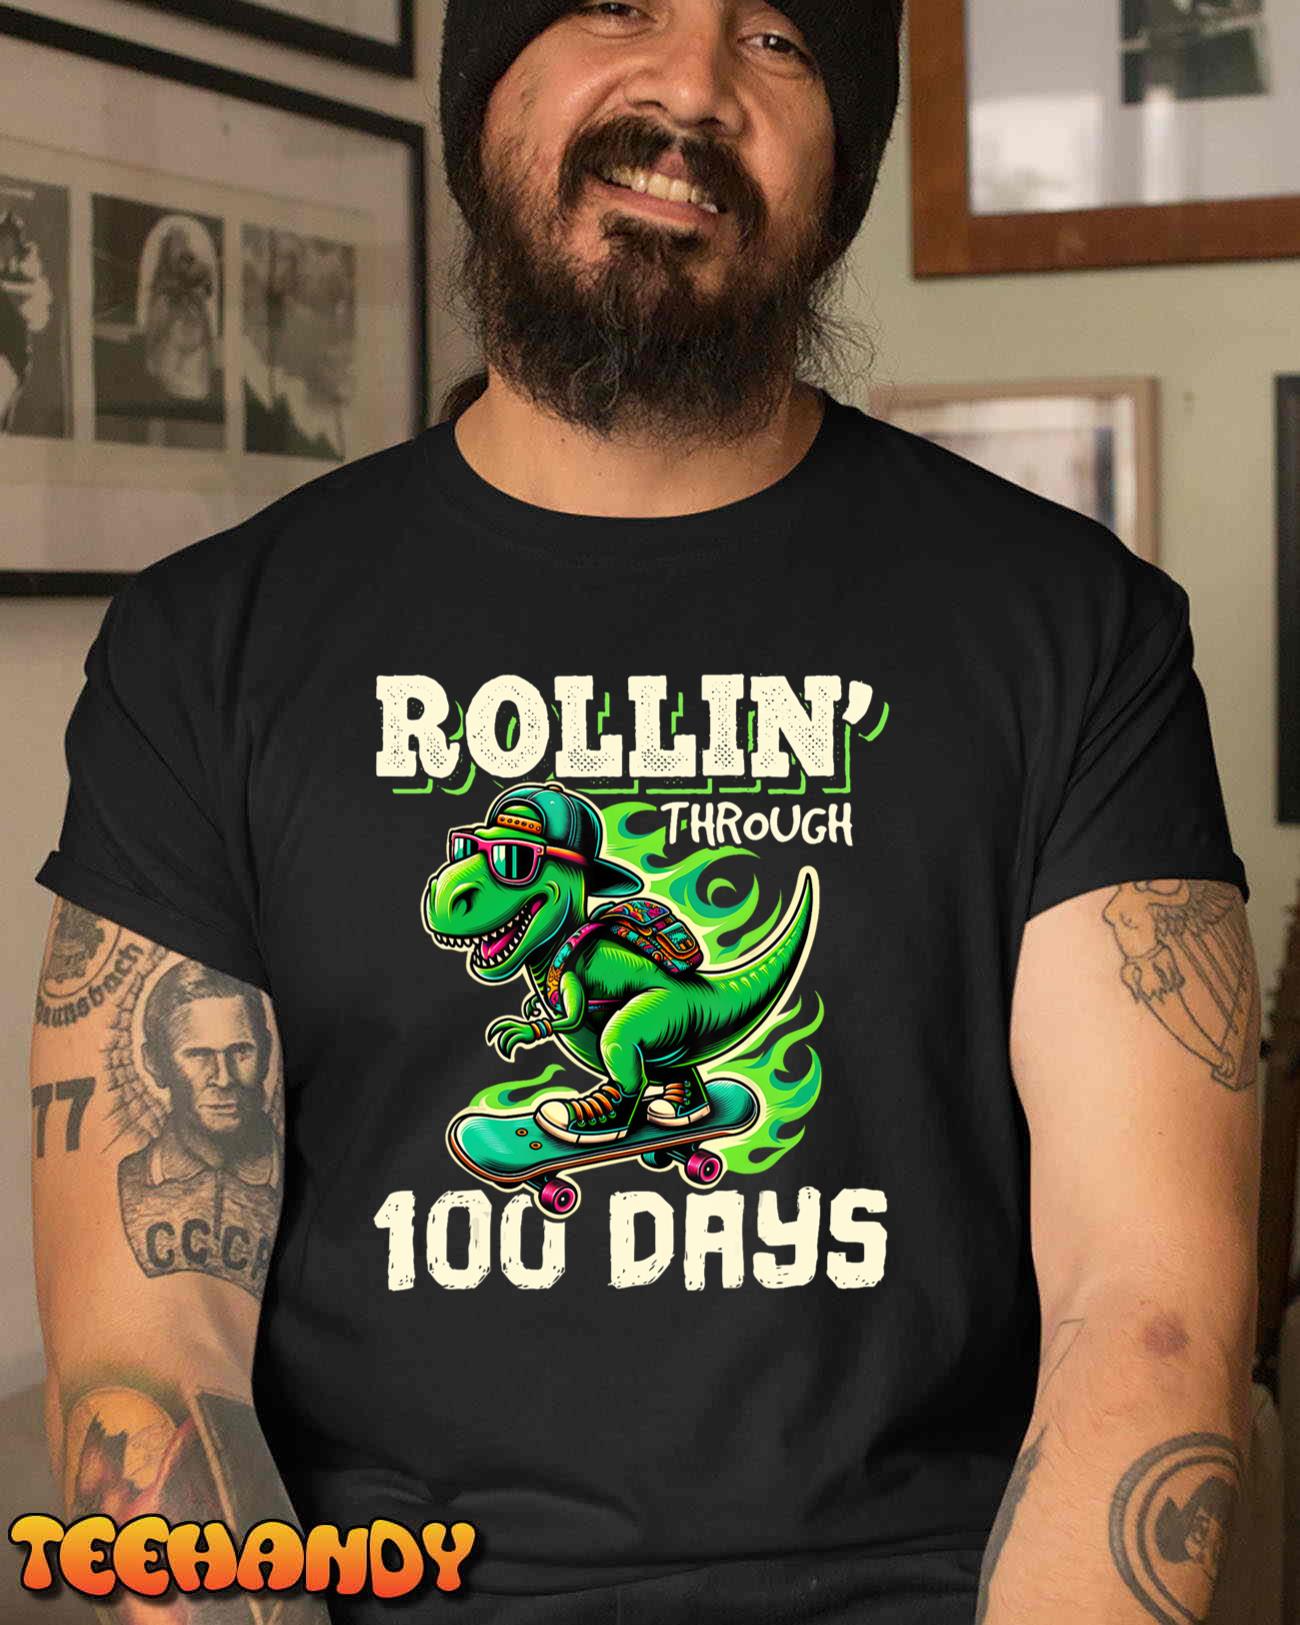 100 Days of School Boys Teacher 100th Day T Rex Outfit T-Shirt